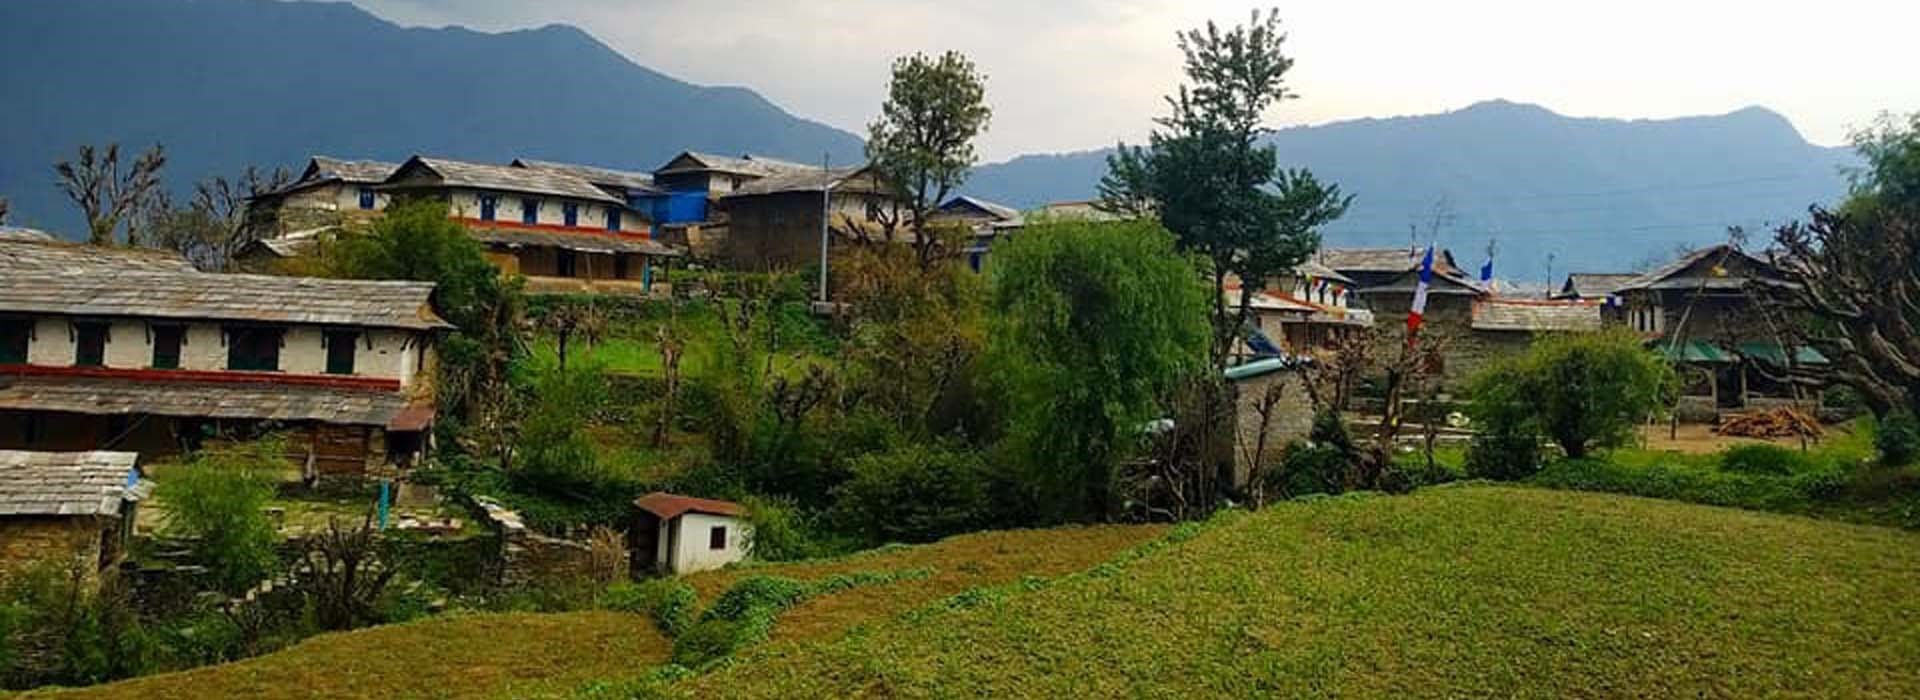 Visiter Landruk - Népal